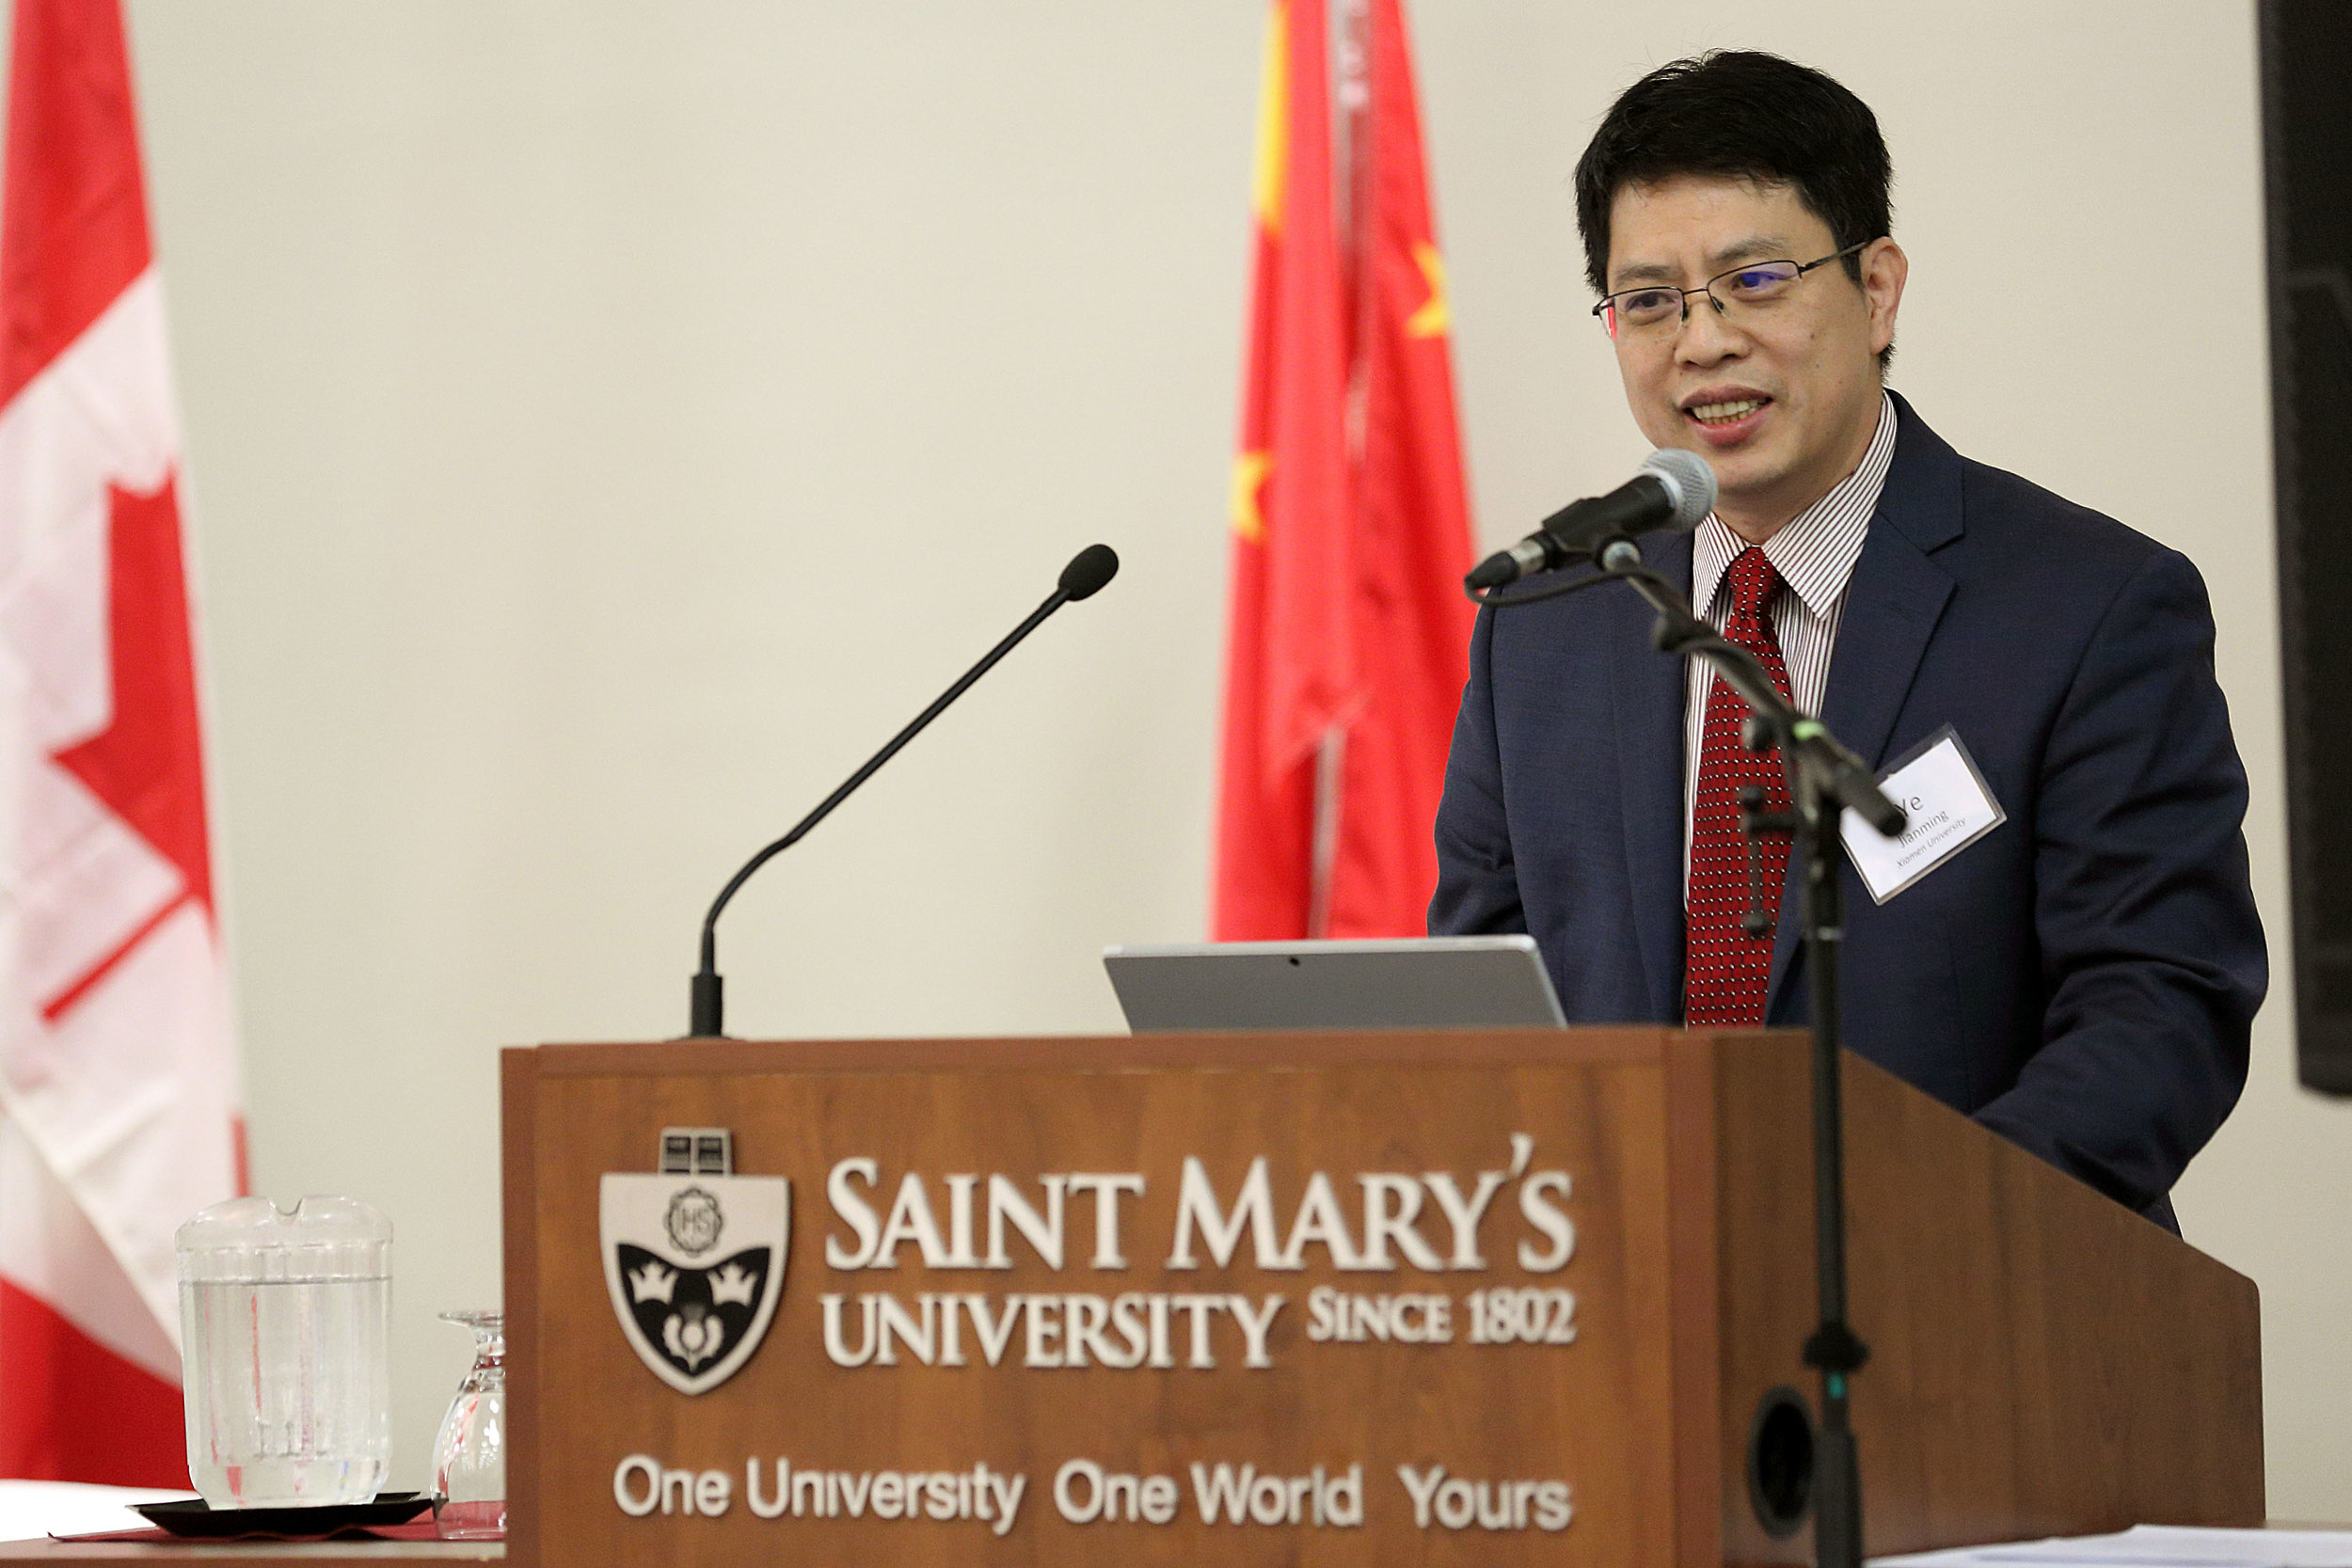 Dr. Ye Jianming, Dean of the School of Management, Xiamen University, China